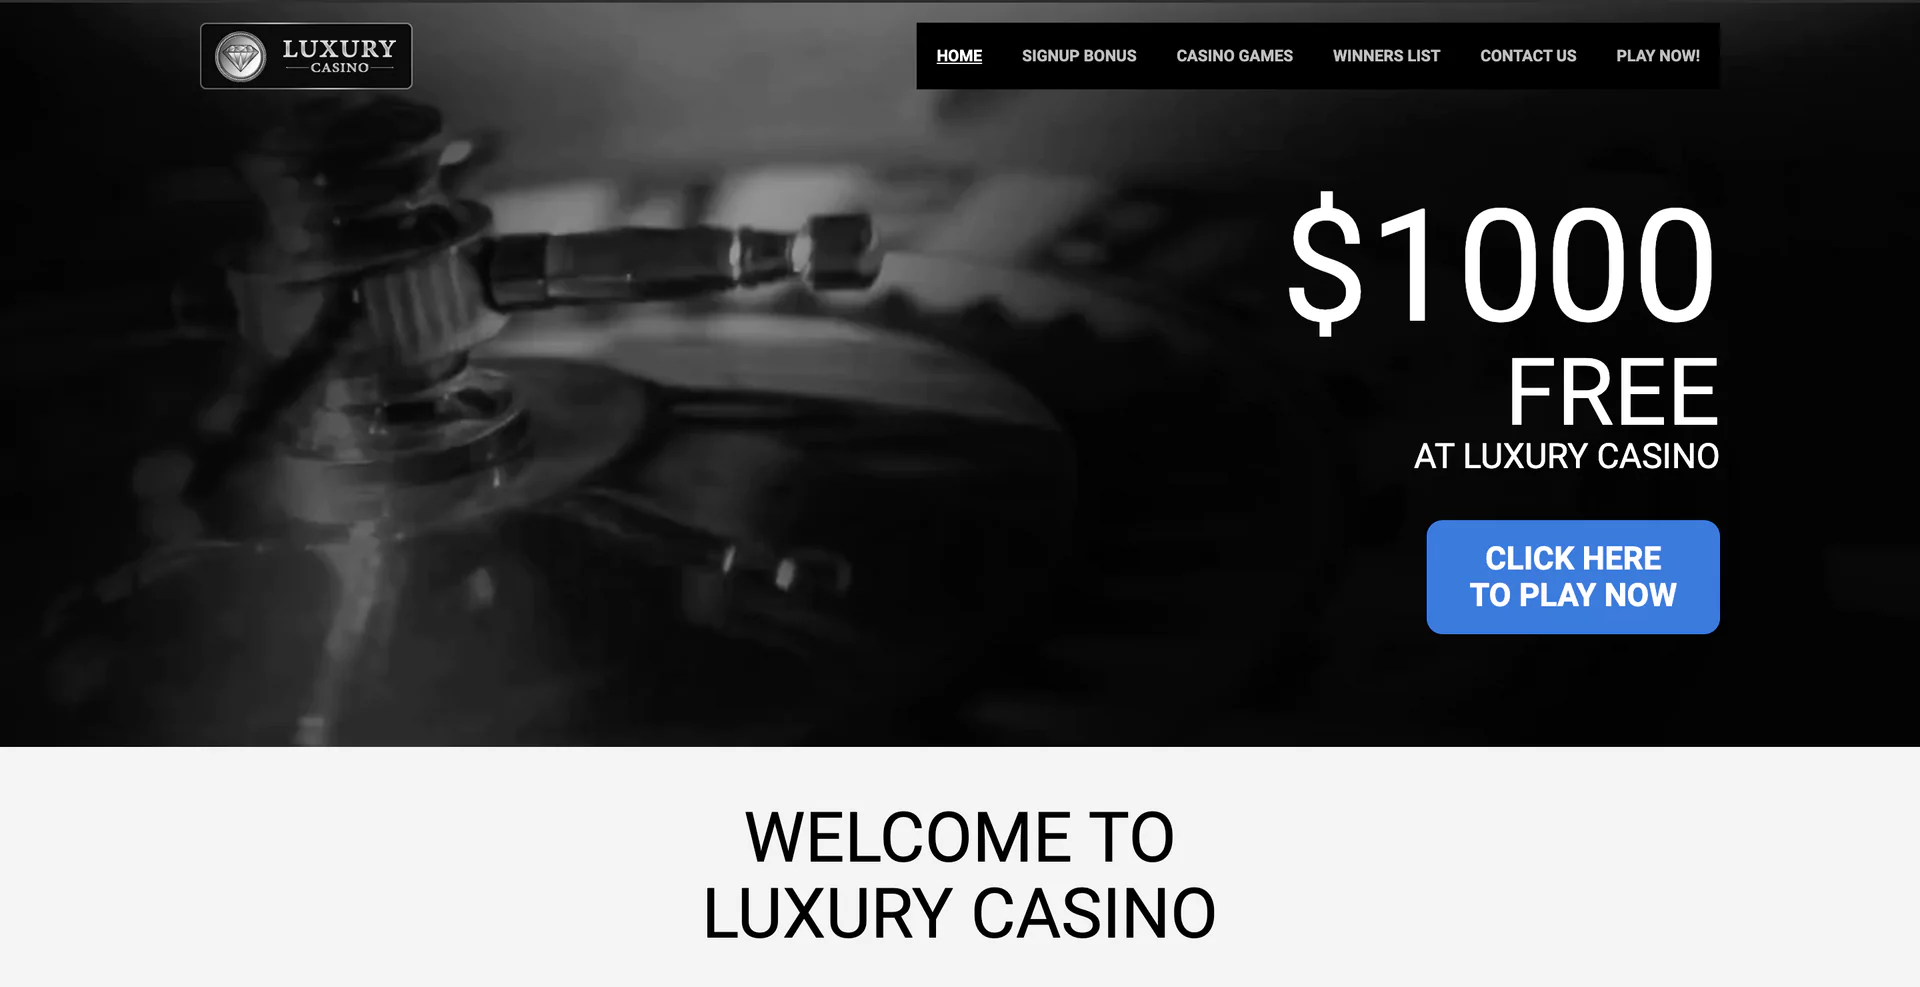 Main page at Luxury Casino